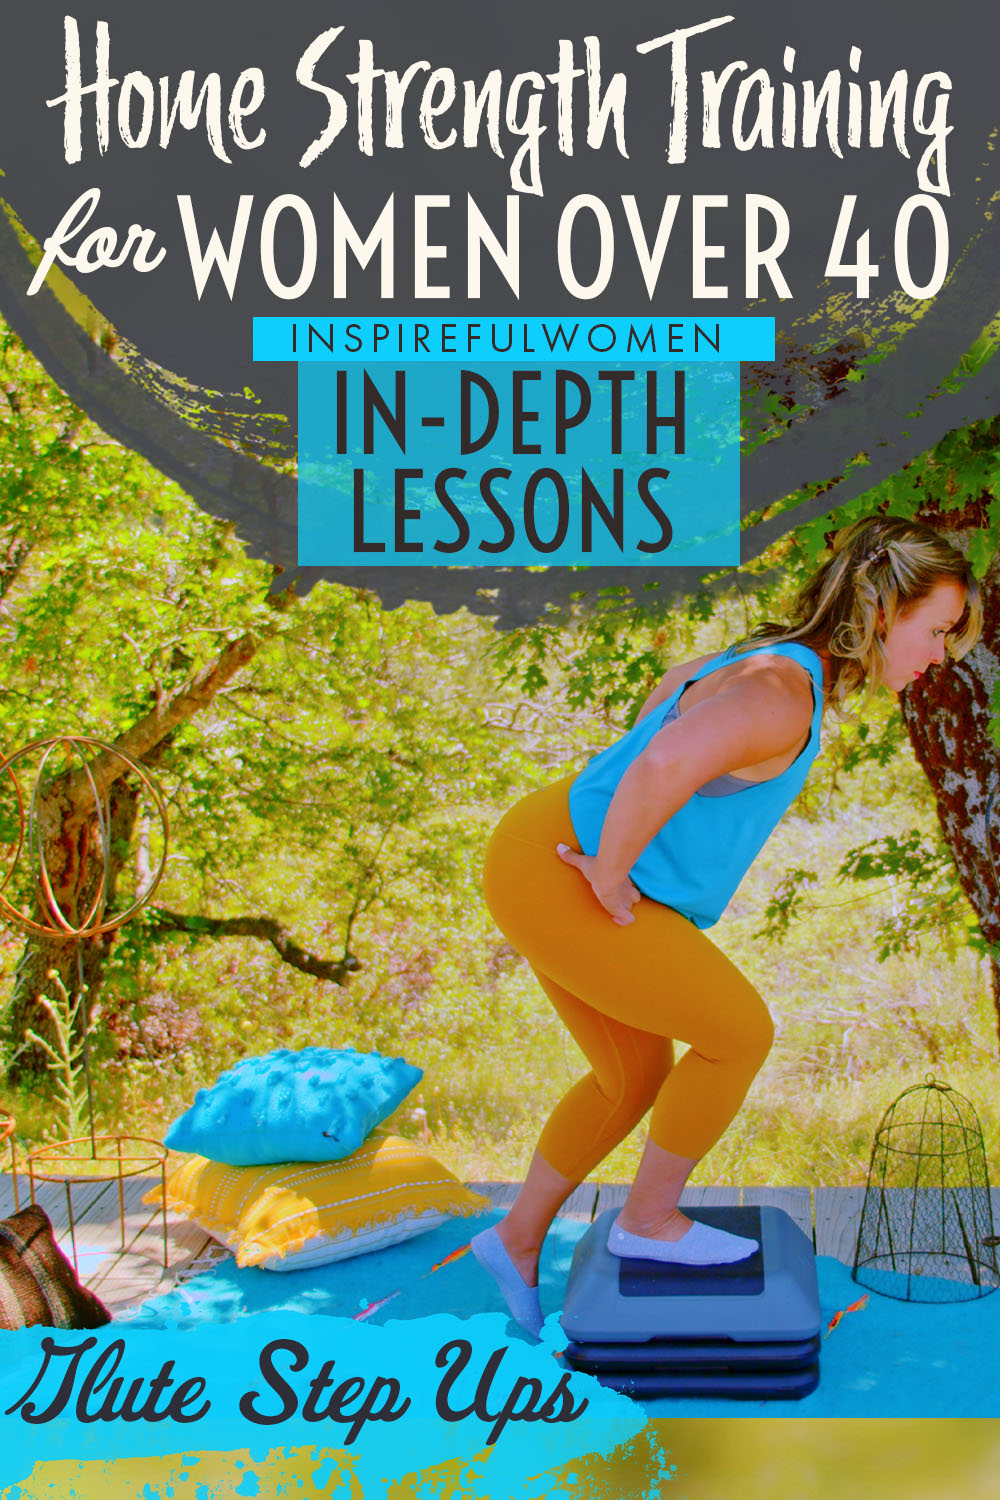 glute-bias-step-ups-squat-alternative-bad-knees-lower-body-exercise-women-40+